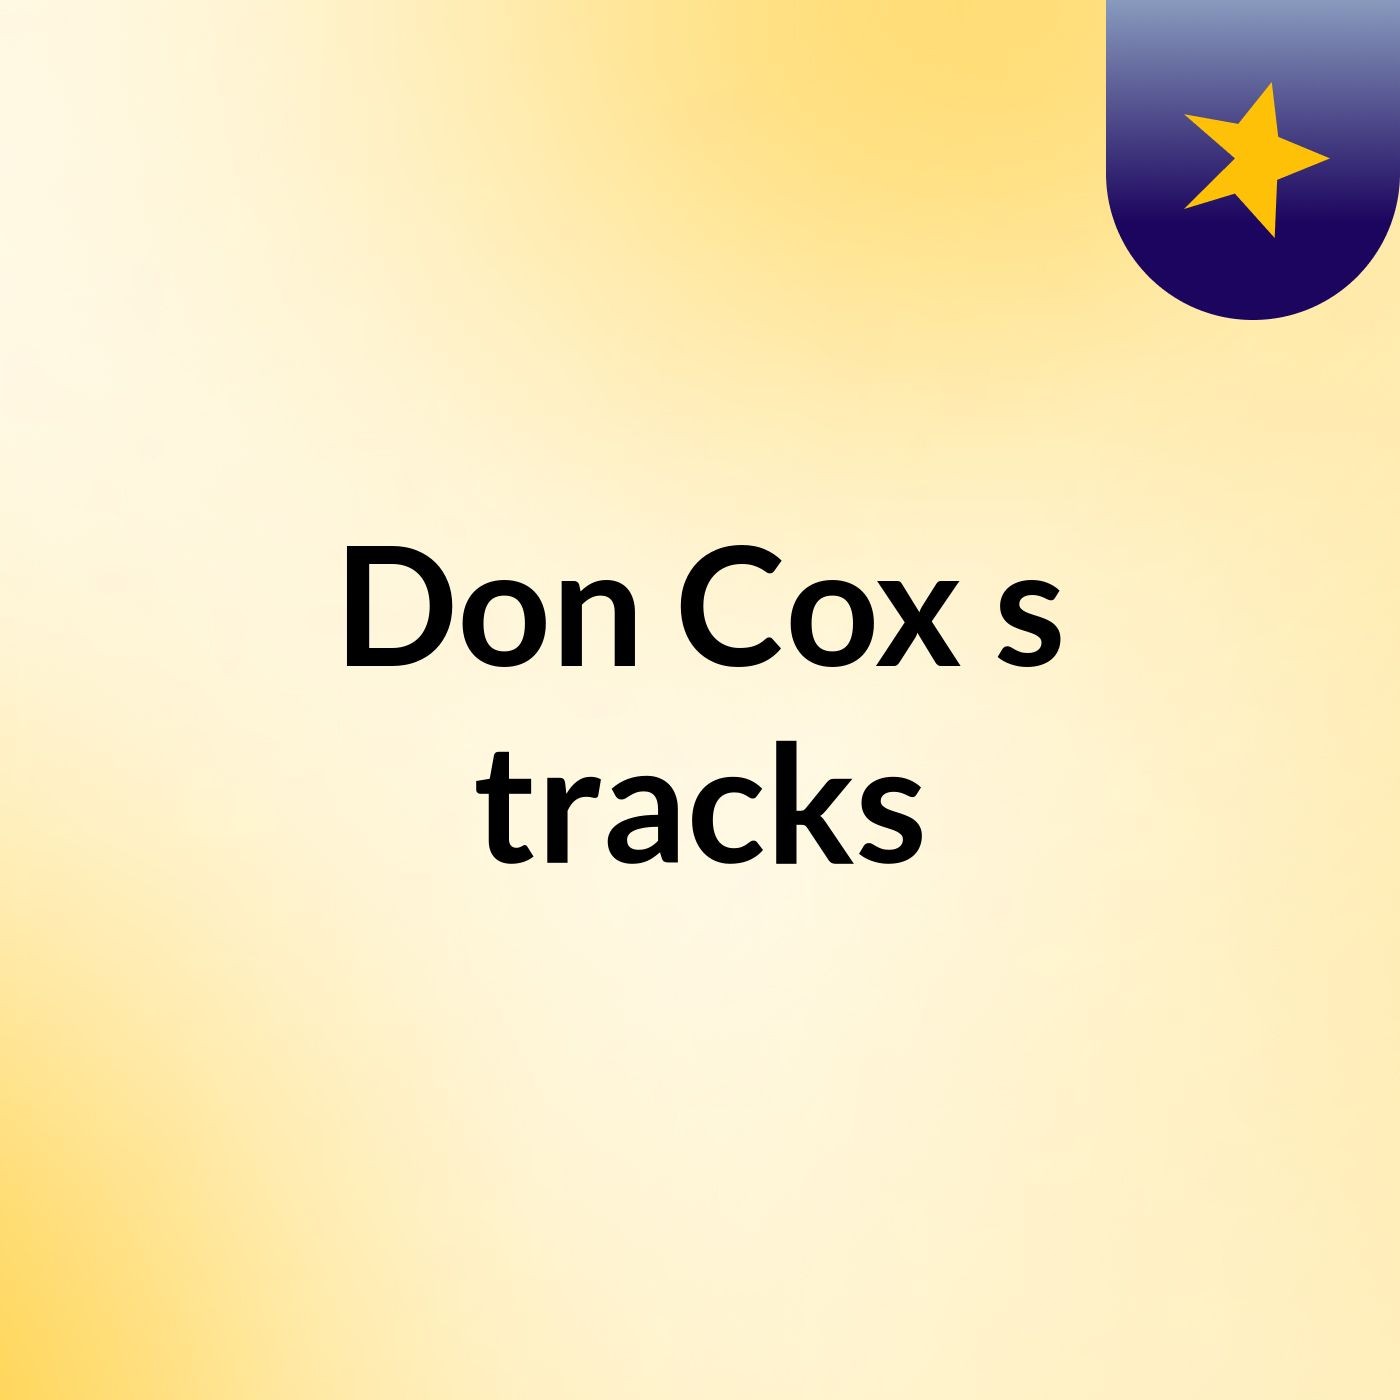 Don Cox's tracks